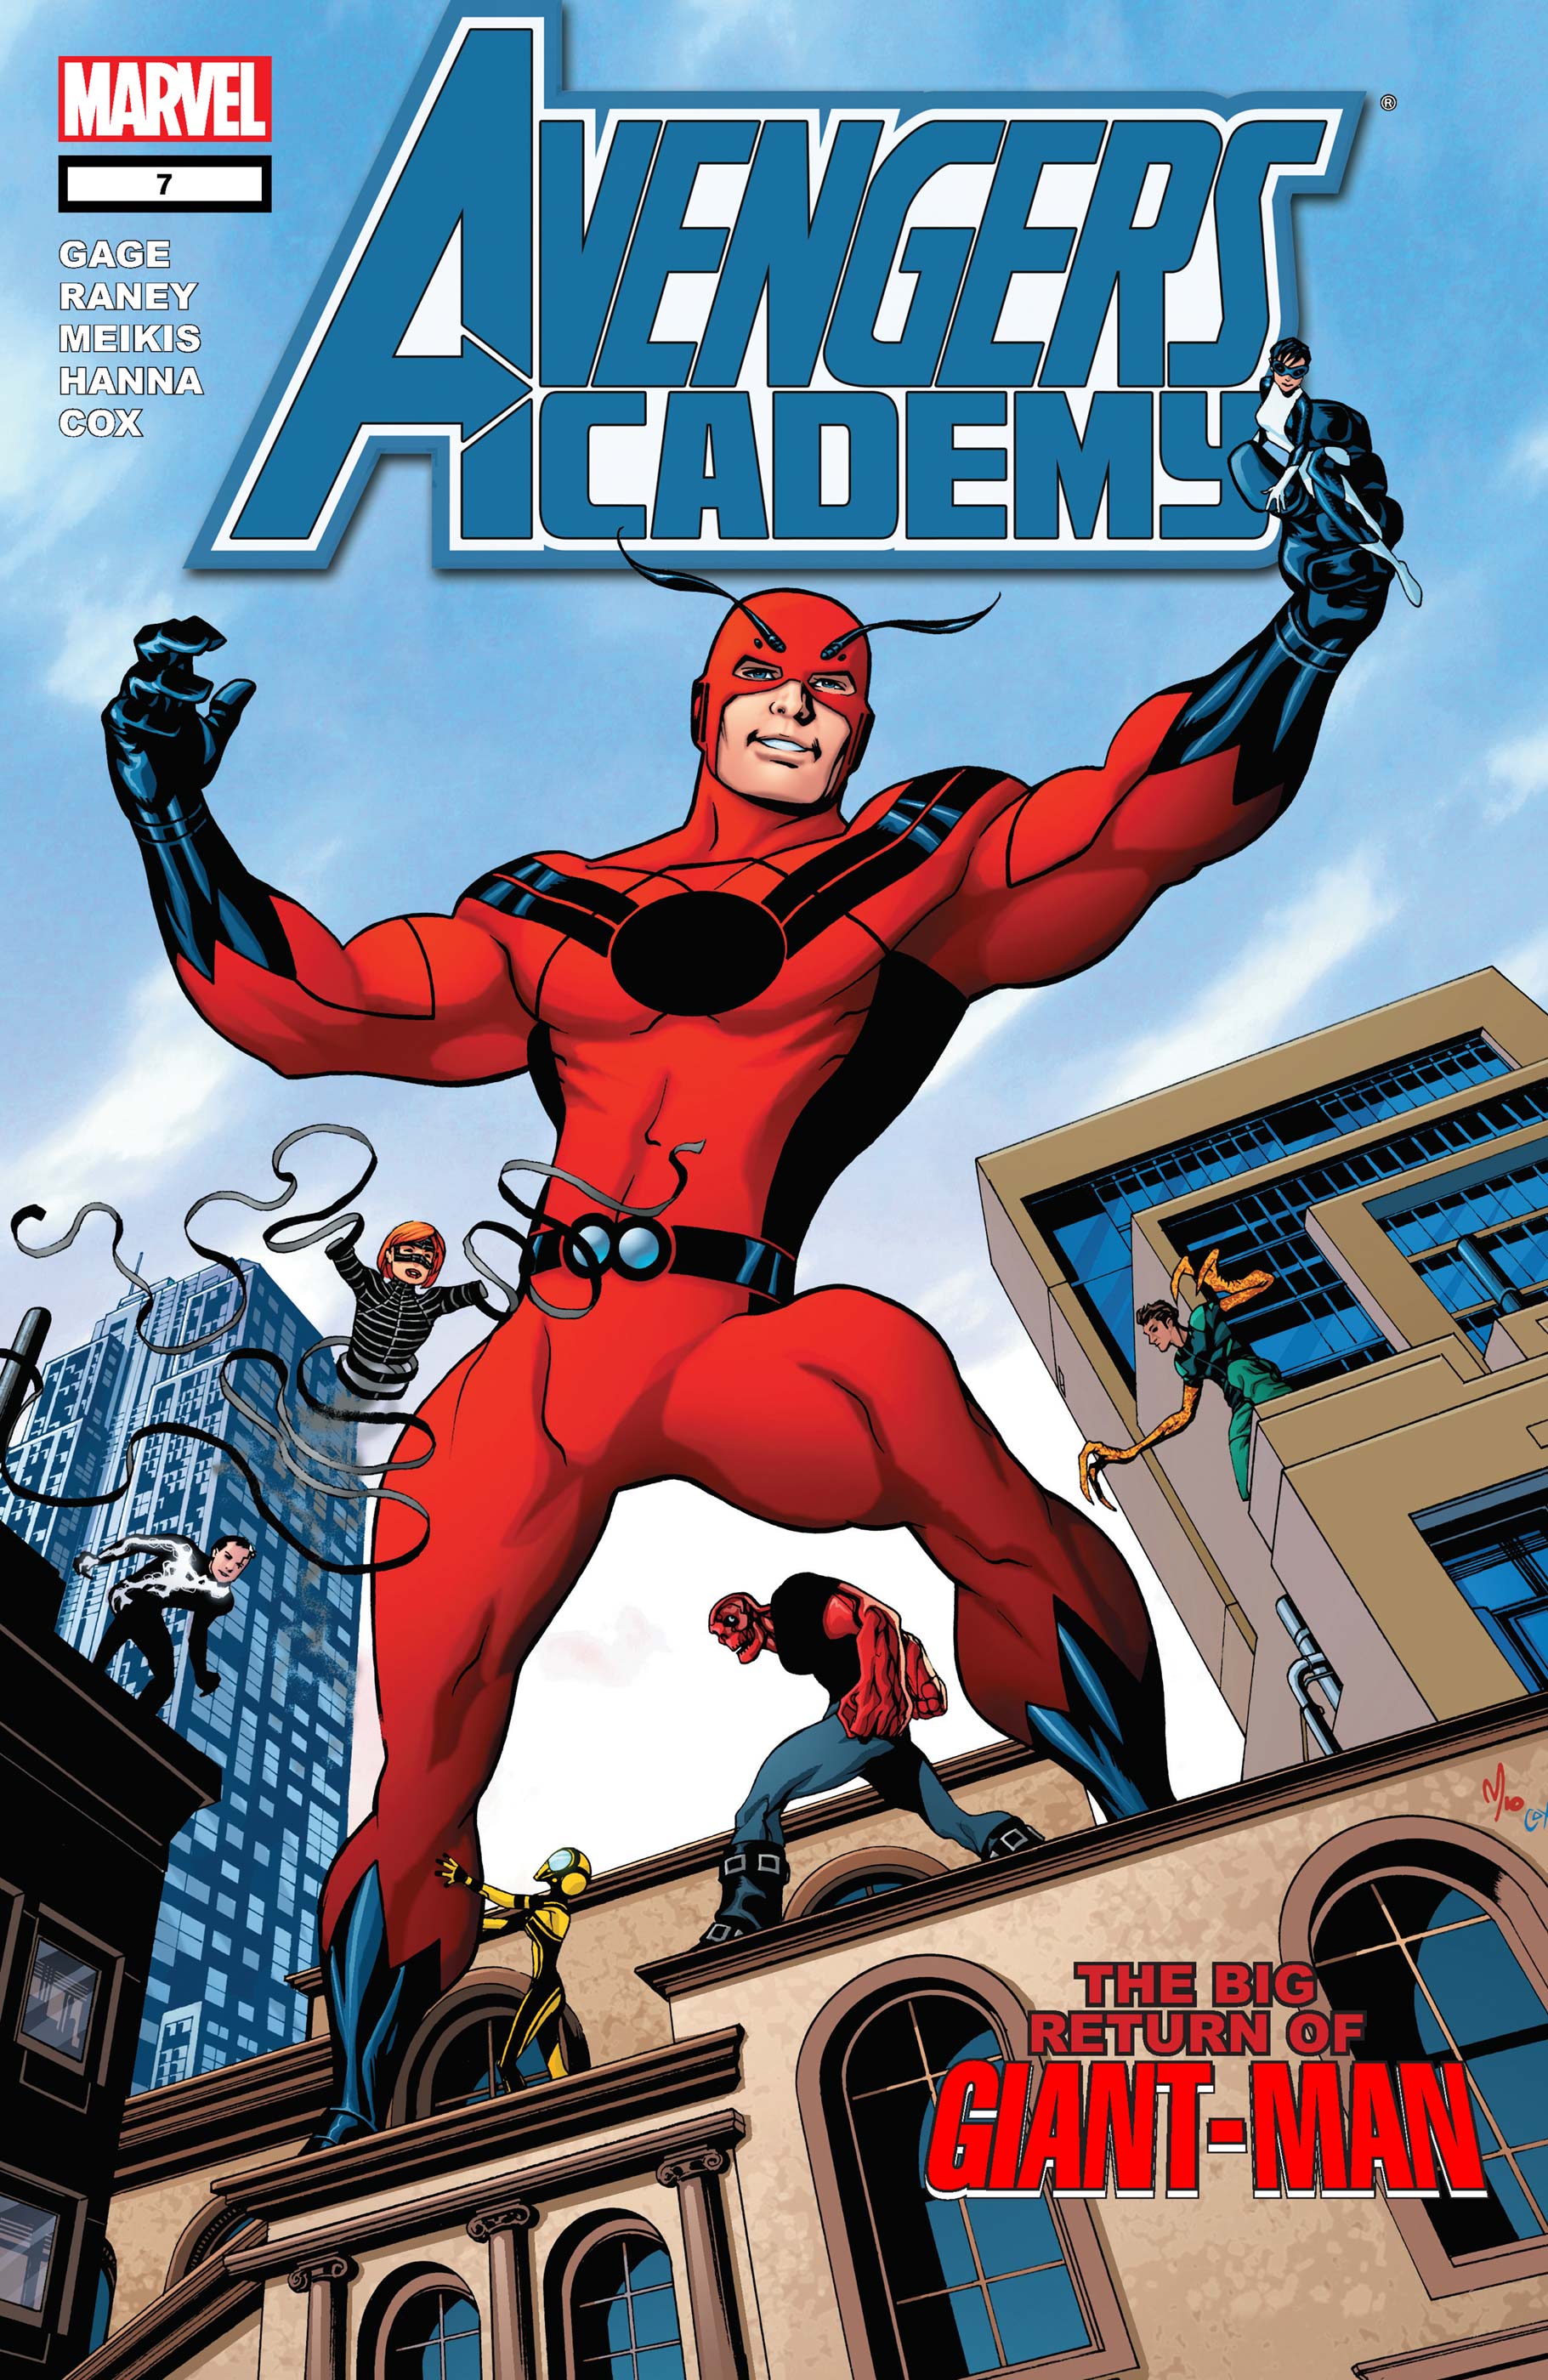 Avengers Academy #2 